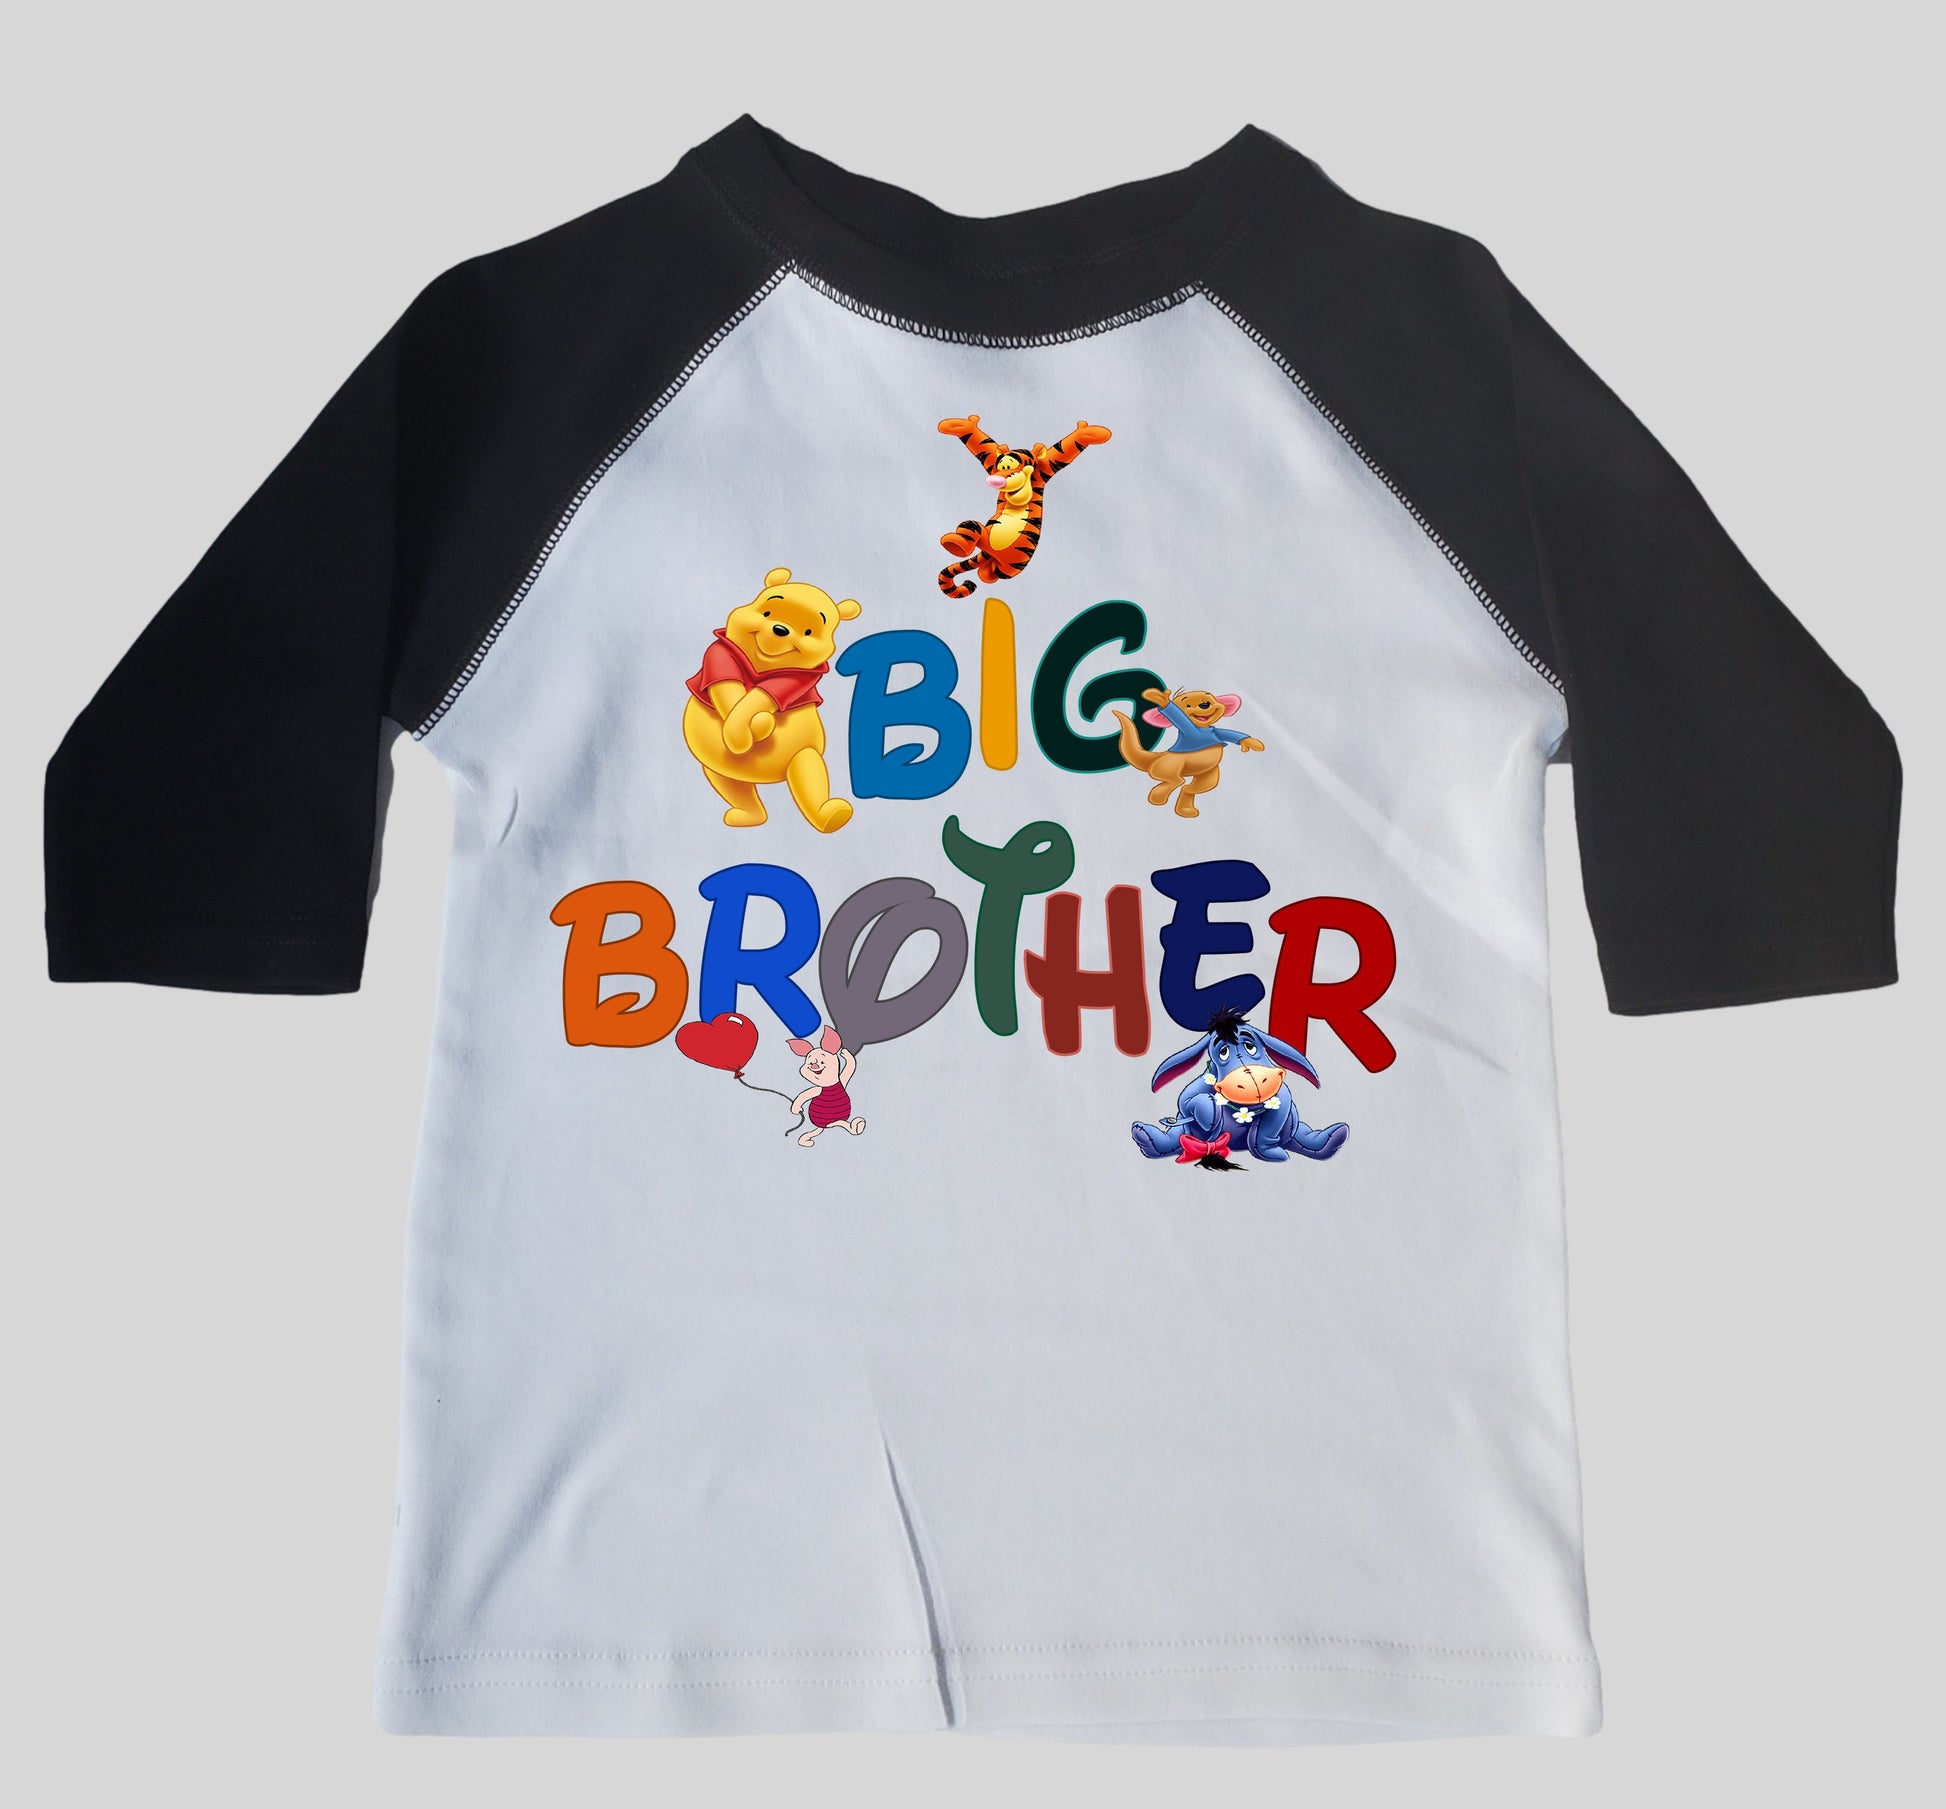 Big brother shirt Winnie  and Friends shirt